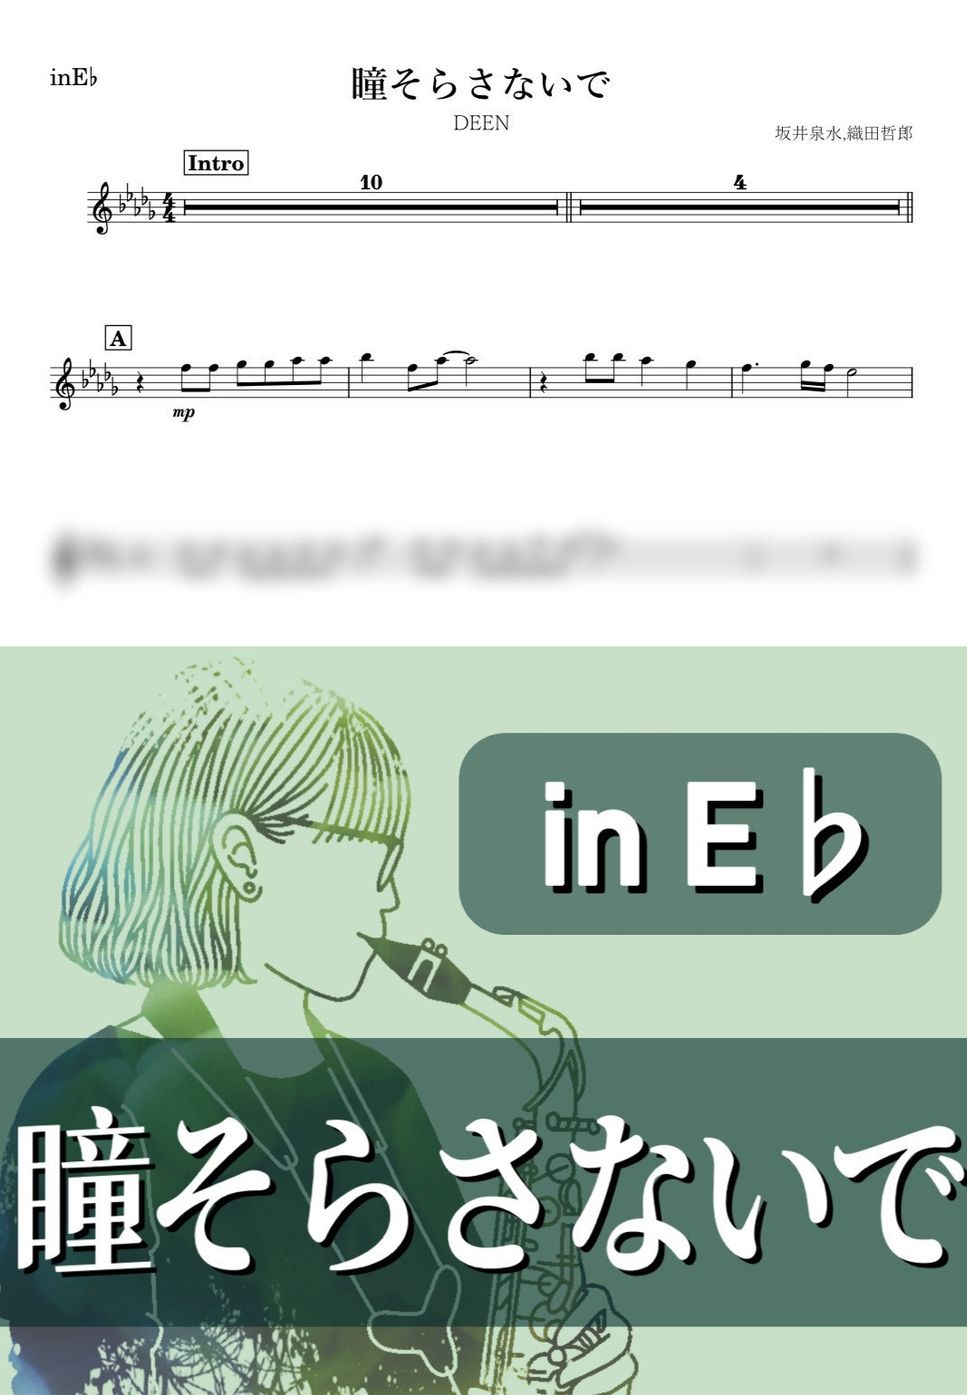 DEEN - 瞳そらさないで (E♭) by kanamusic